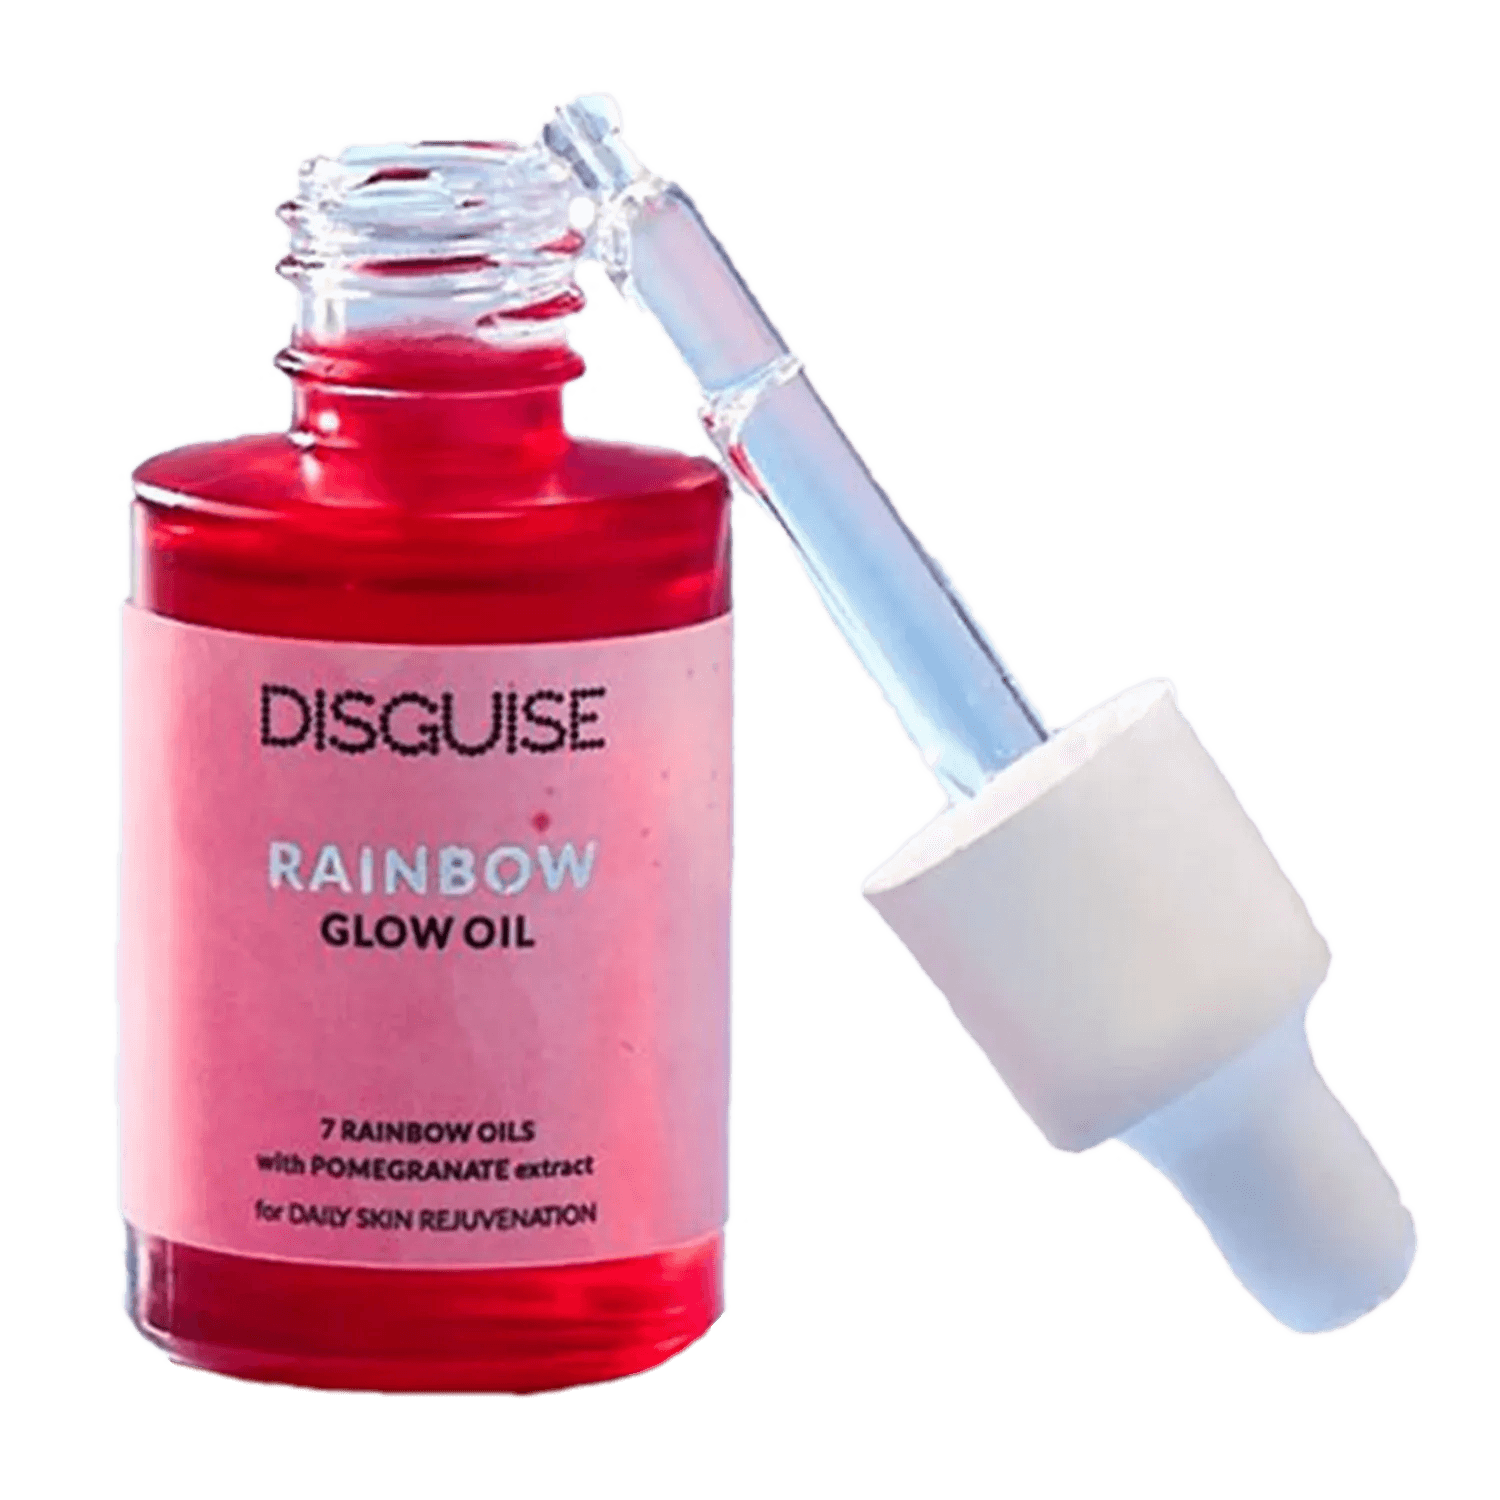 DISGUISE Rainbow Glow Oil (28ml)